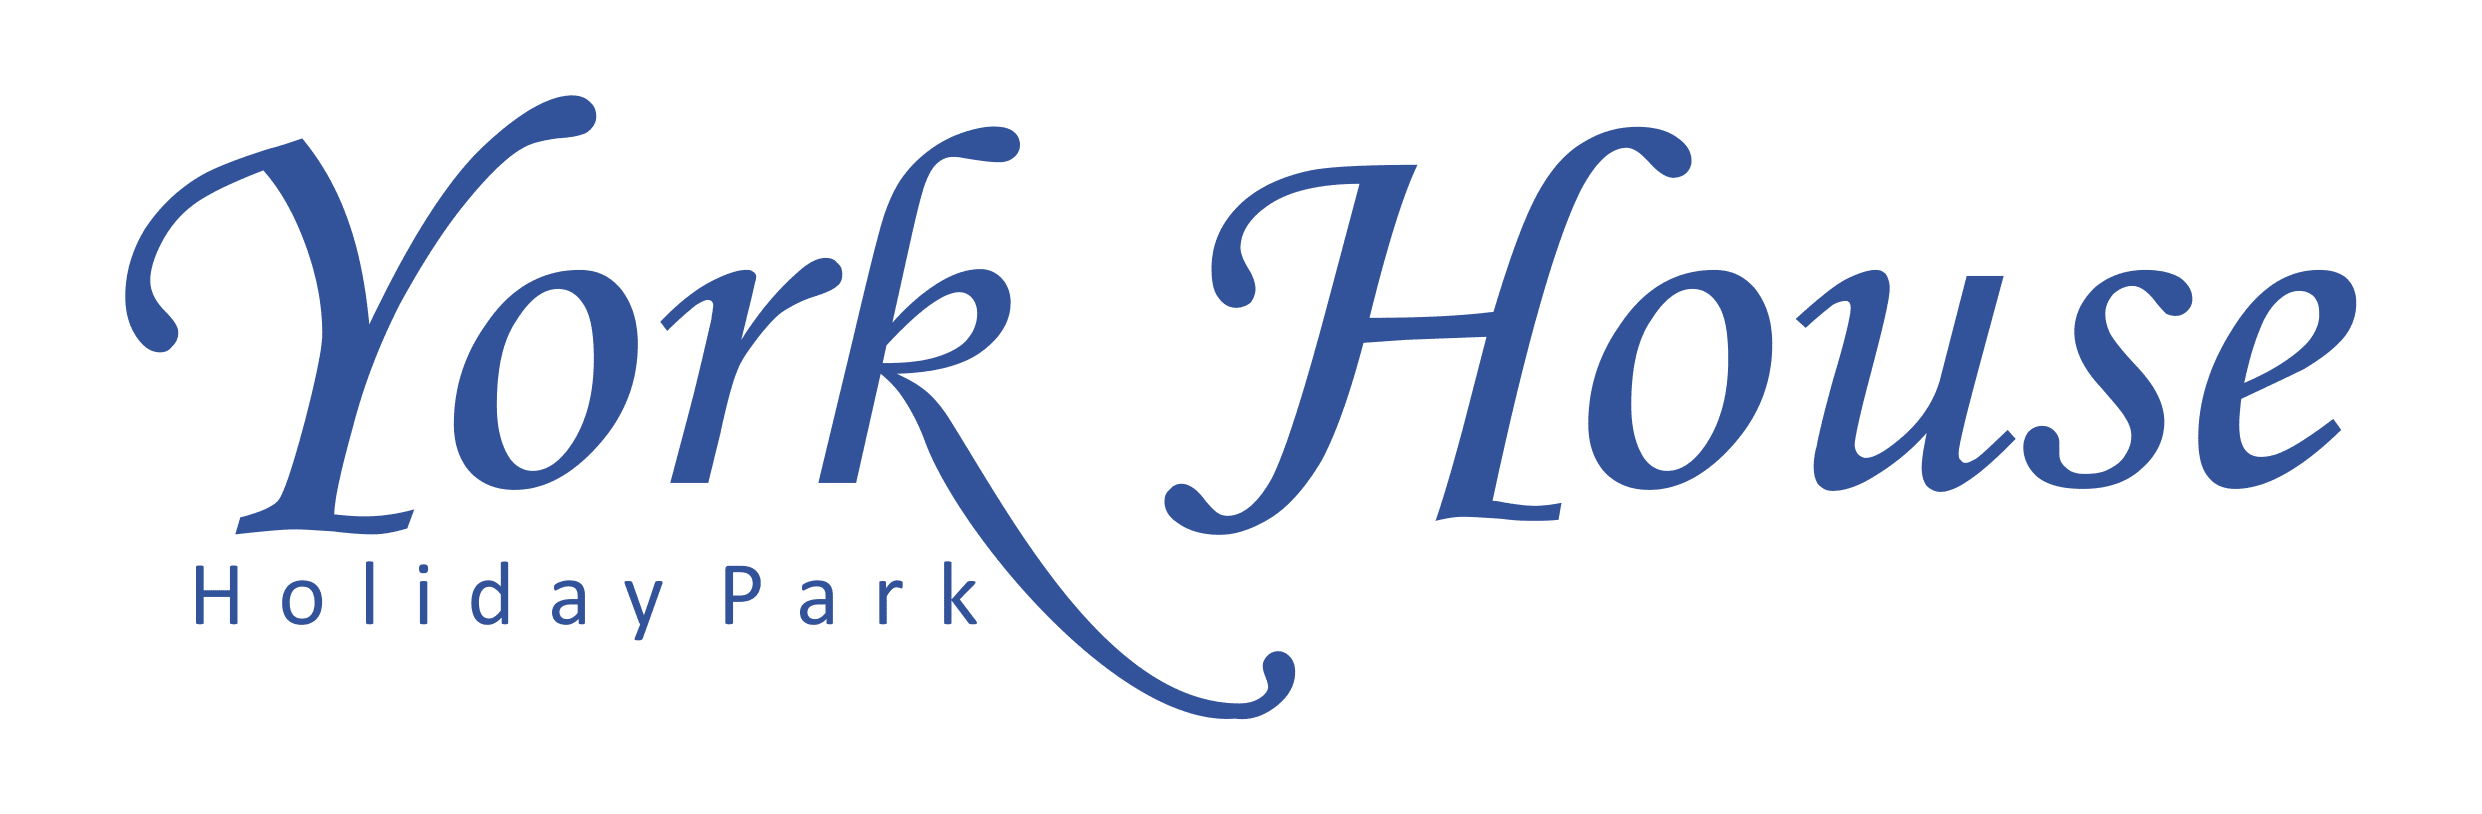 YHHP Logo holiday homes near Thirsk